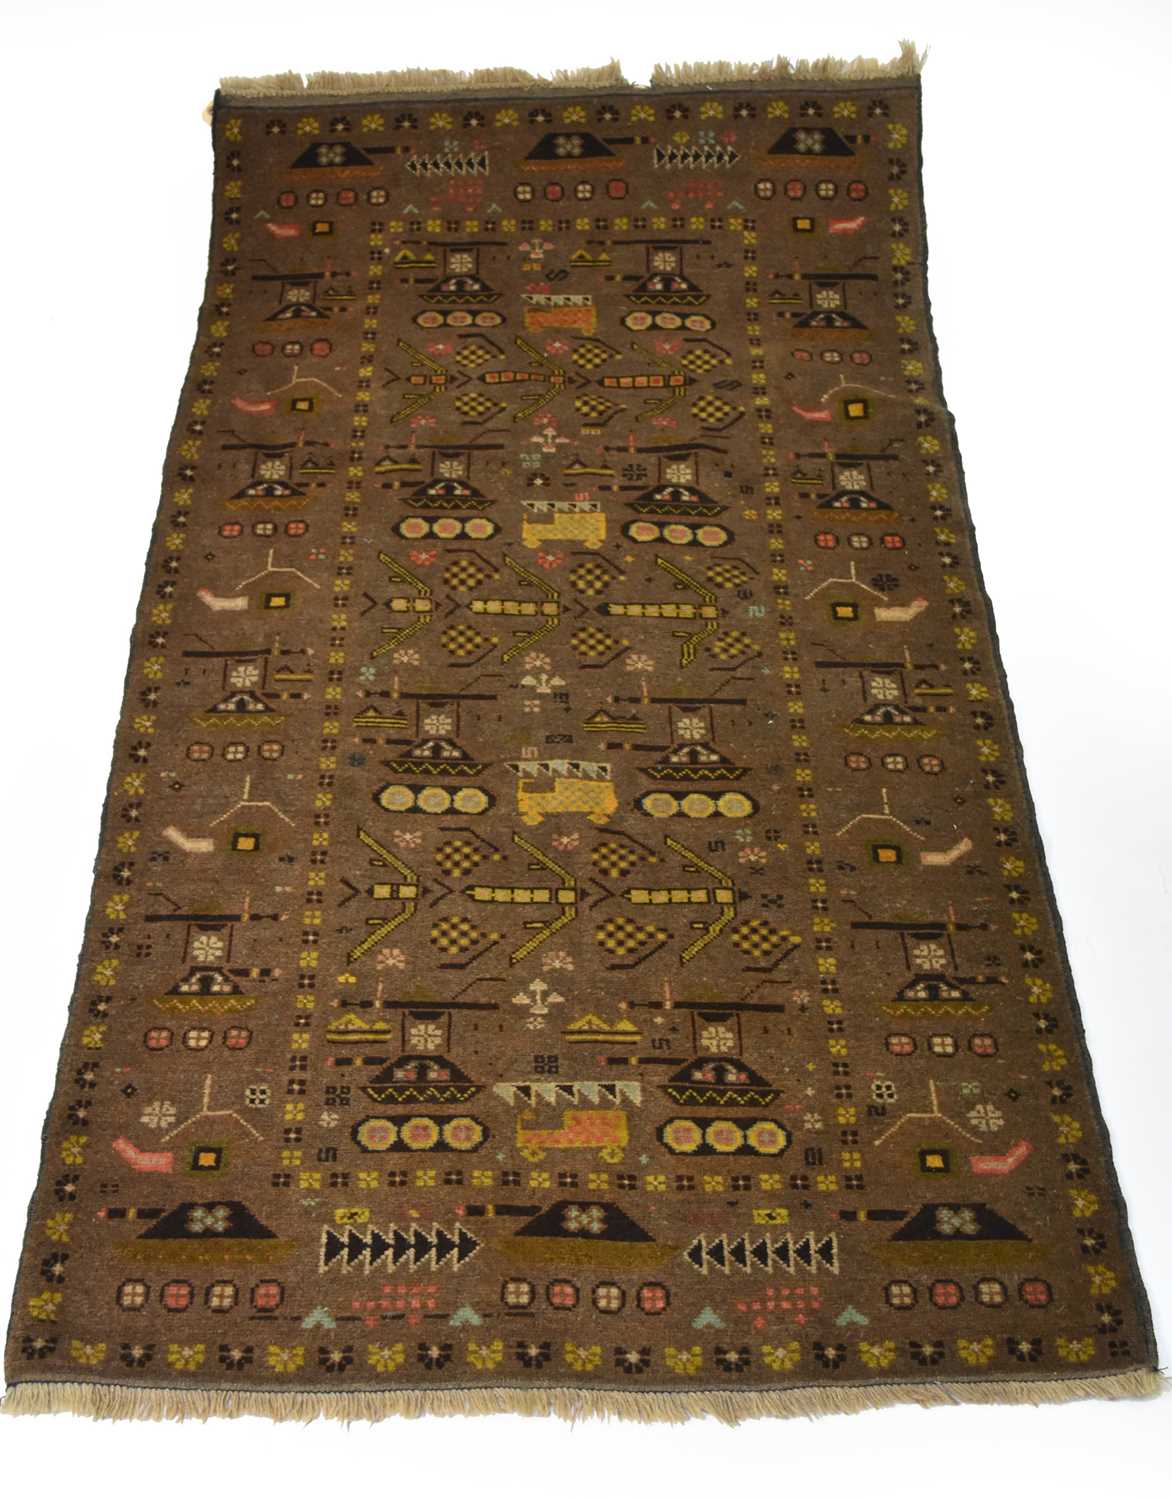 An Afghan war rug